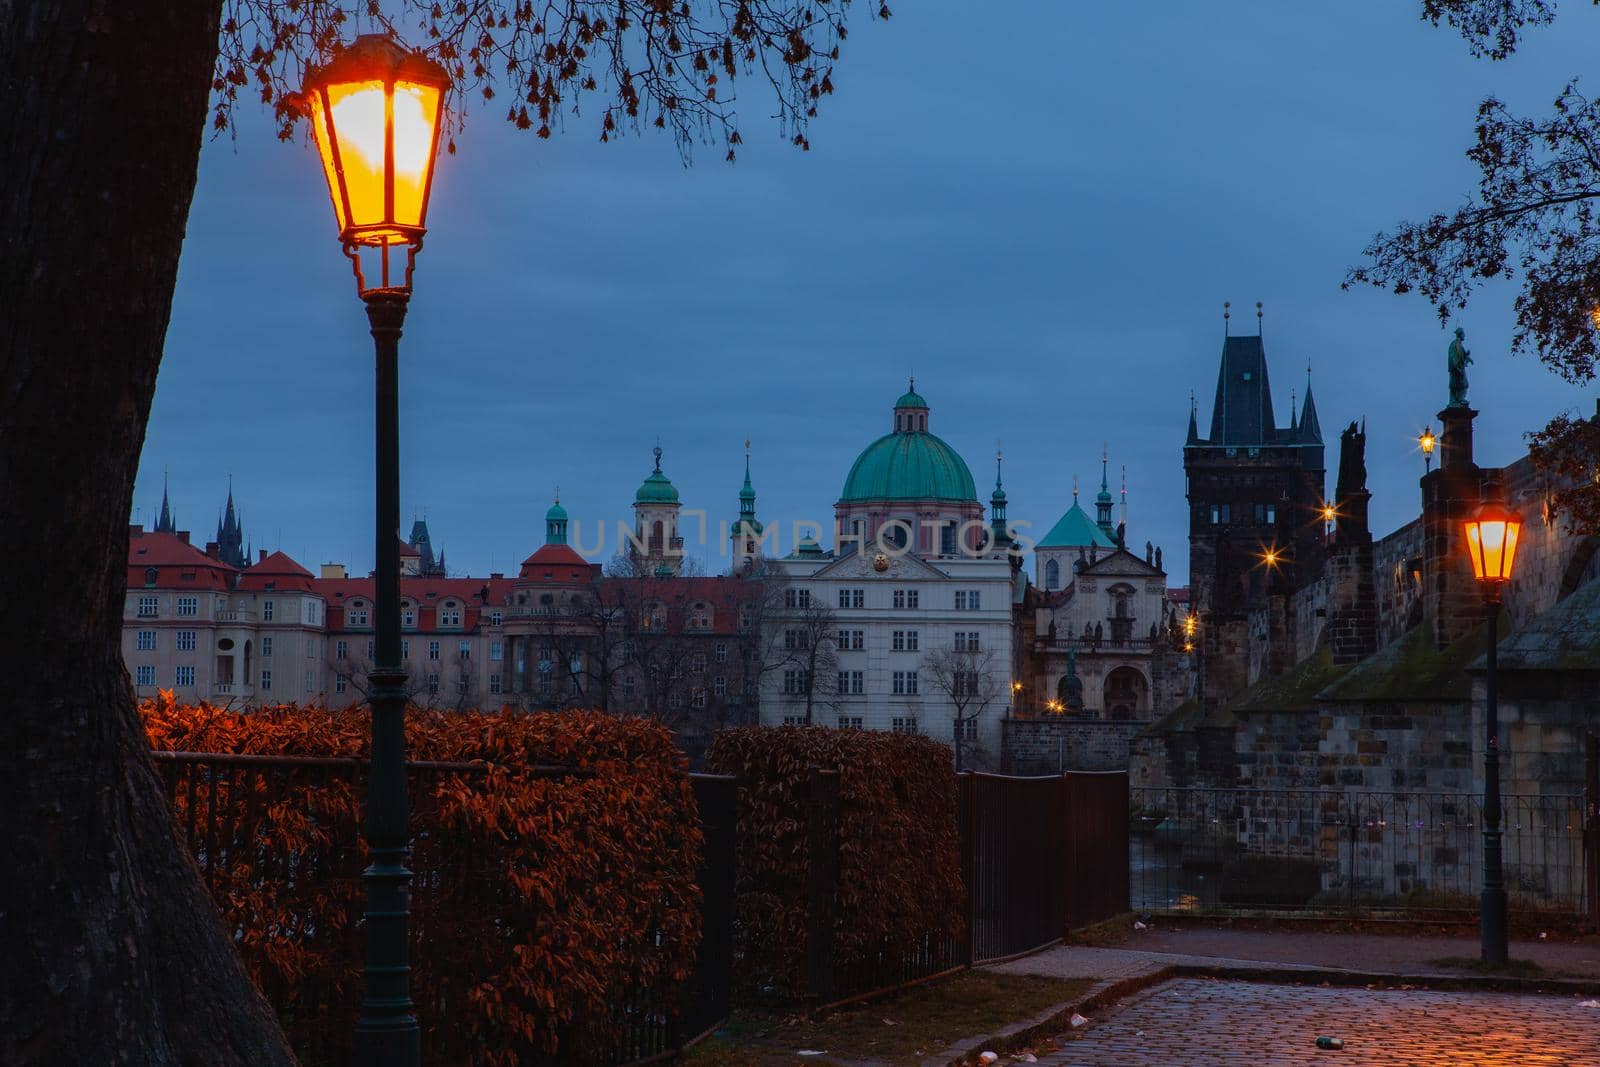 Evening scenery next to Charles bridge, Prague, Czech Republic. Twilight scenery. Popular European travel destination.